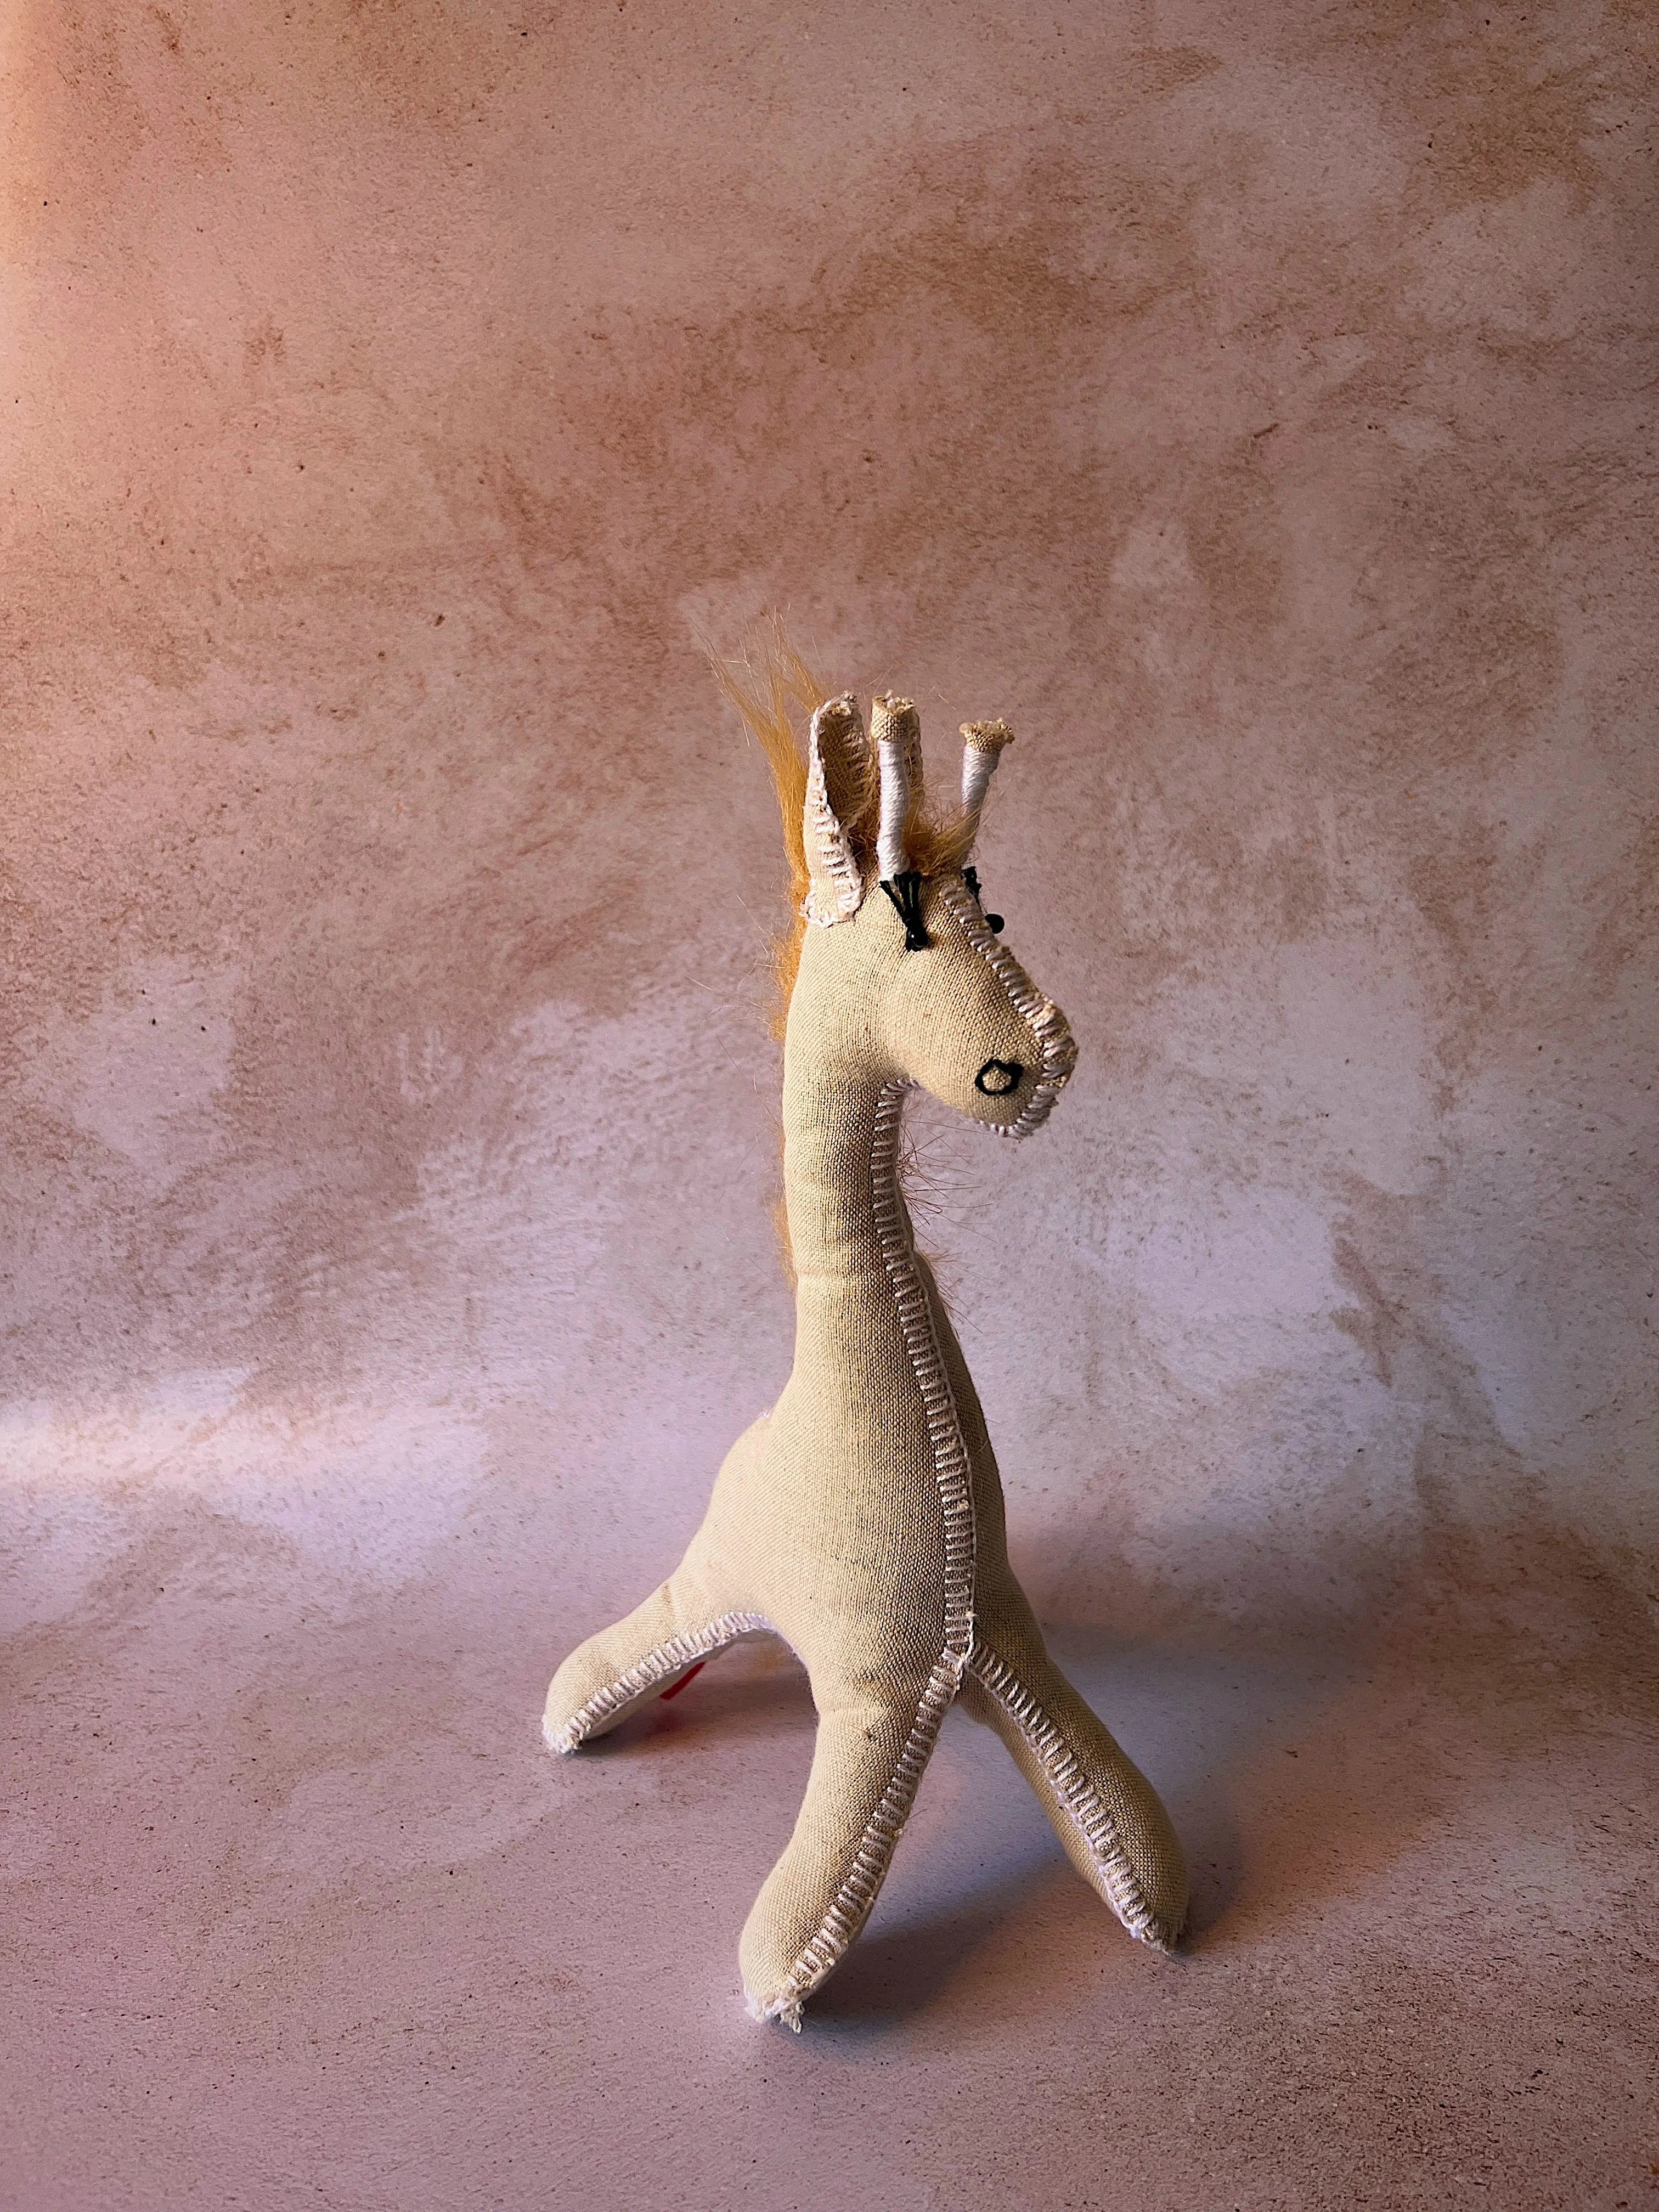 Handmade Linen Animals Toy Project